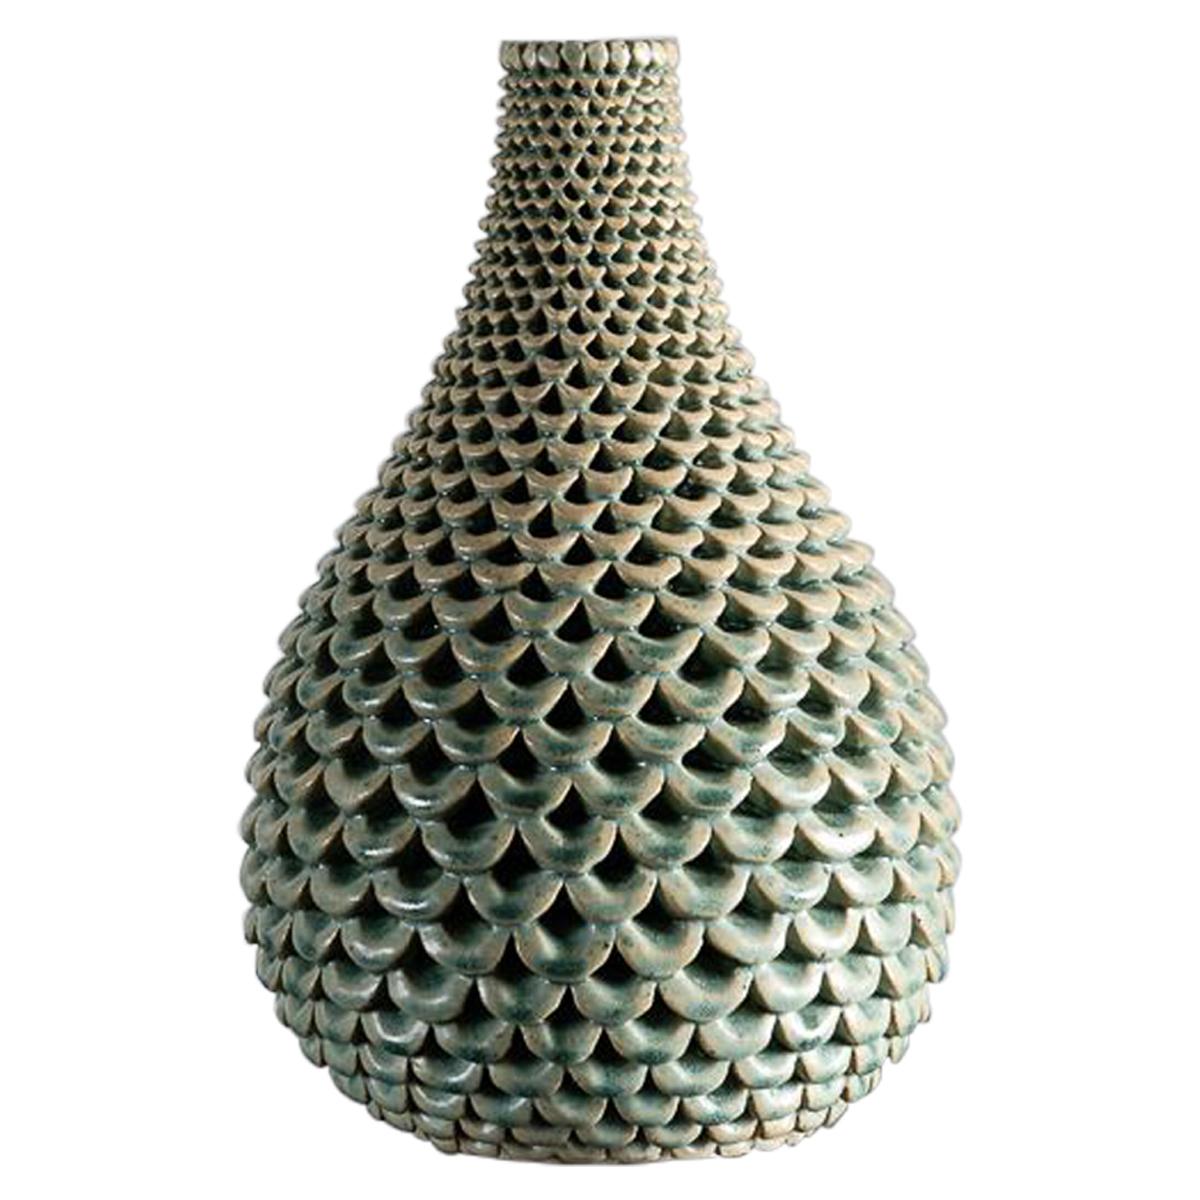 Per Liljegren, Green Ceramic Vase, Sweden, 2019